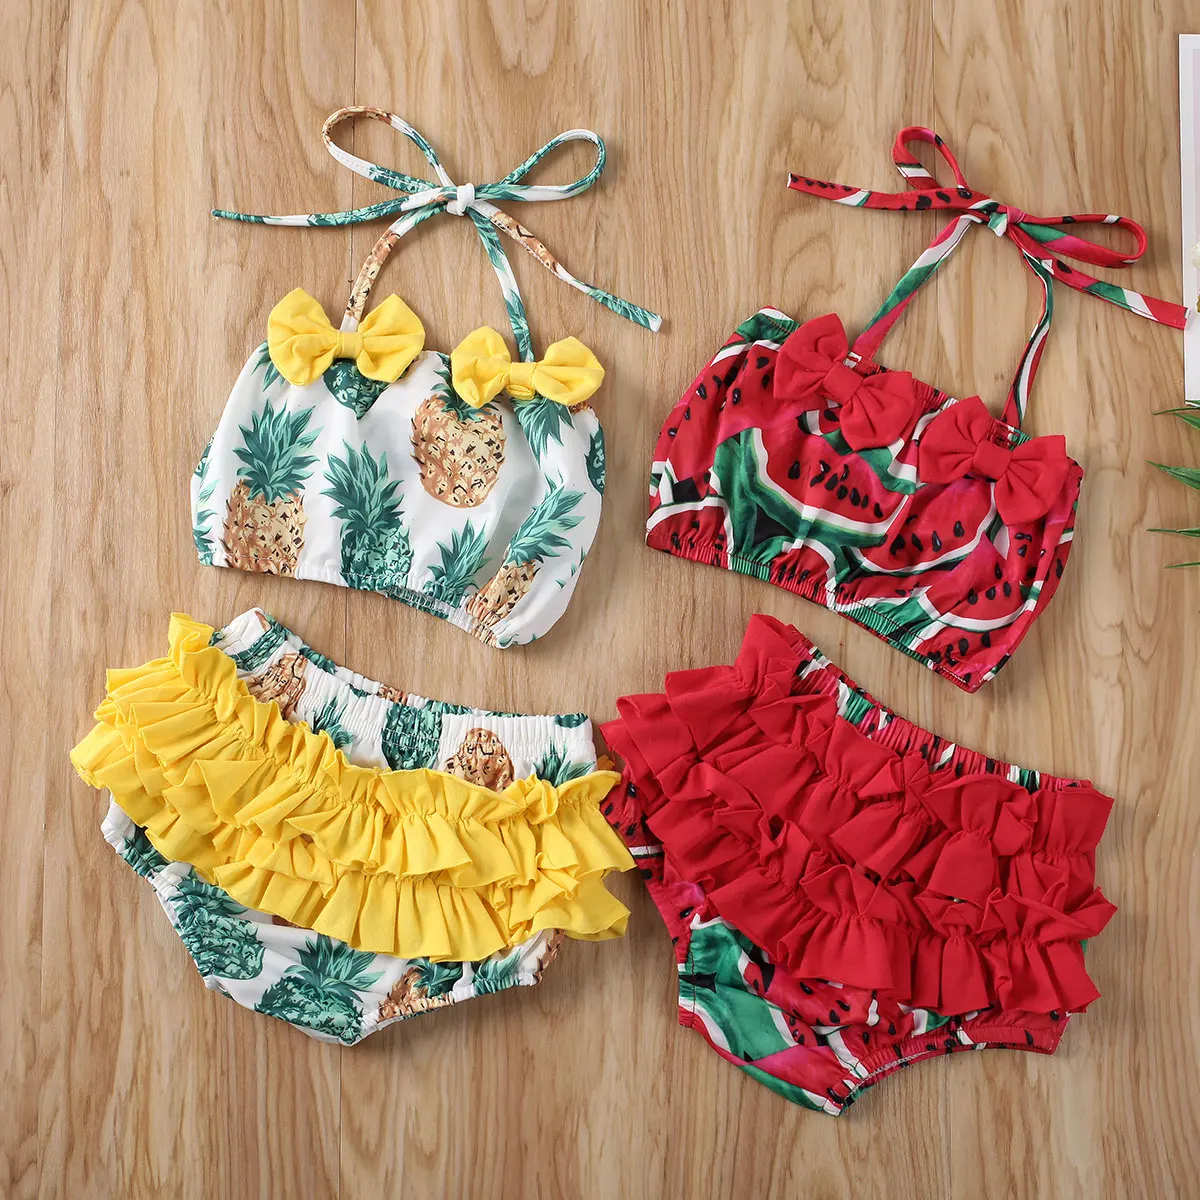 

Baby Girl Watermelon Pineapple Print Bikini Sets Bow Halter Bikini Top Ruffle Briefs 6M-5Y Toddler Kids Swimsuit Bathing Suit